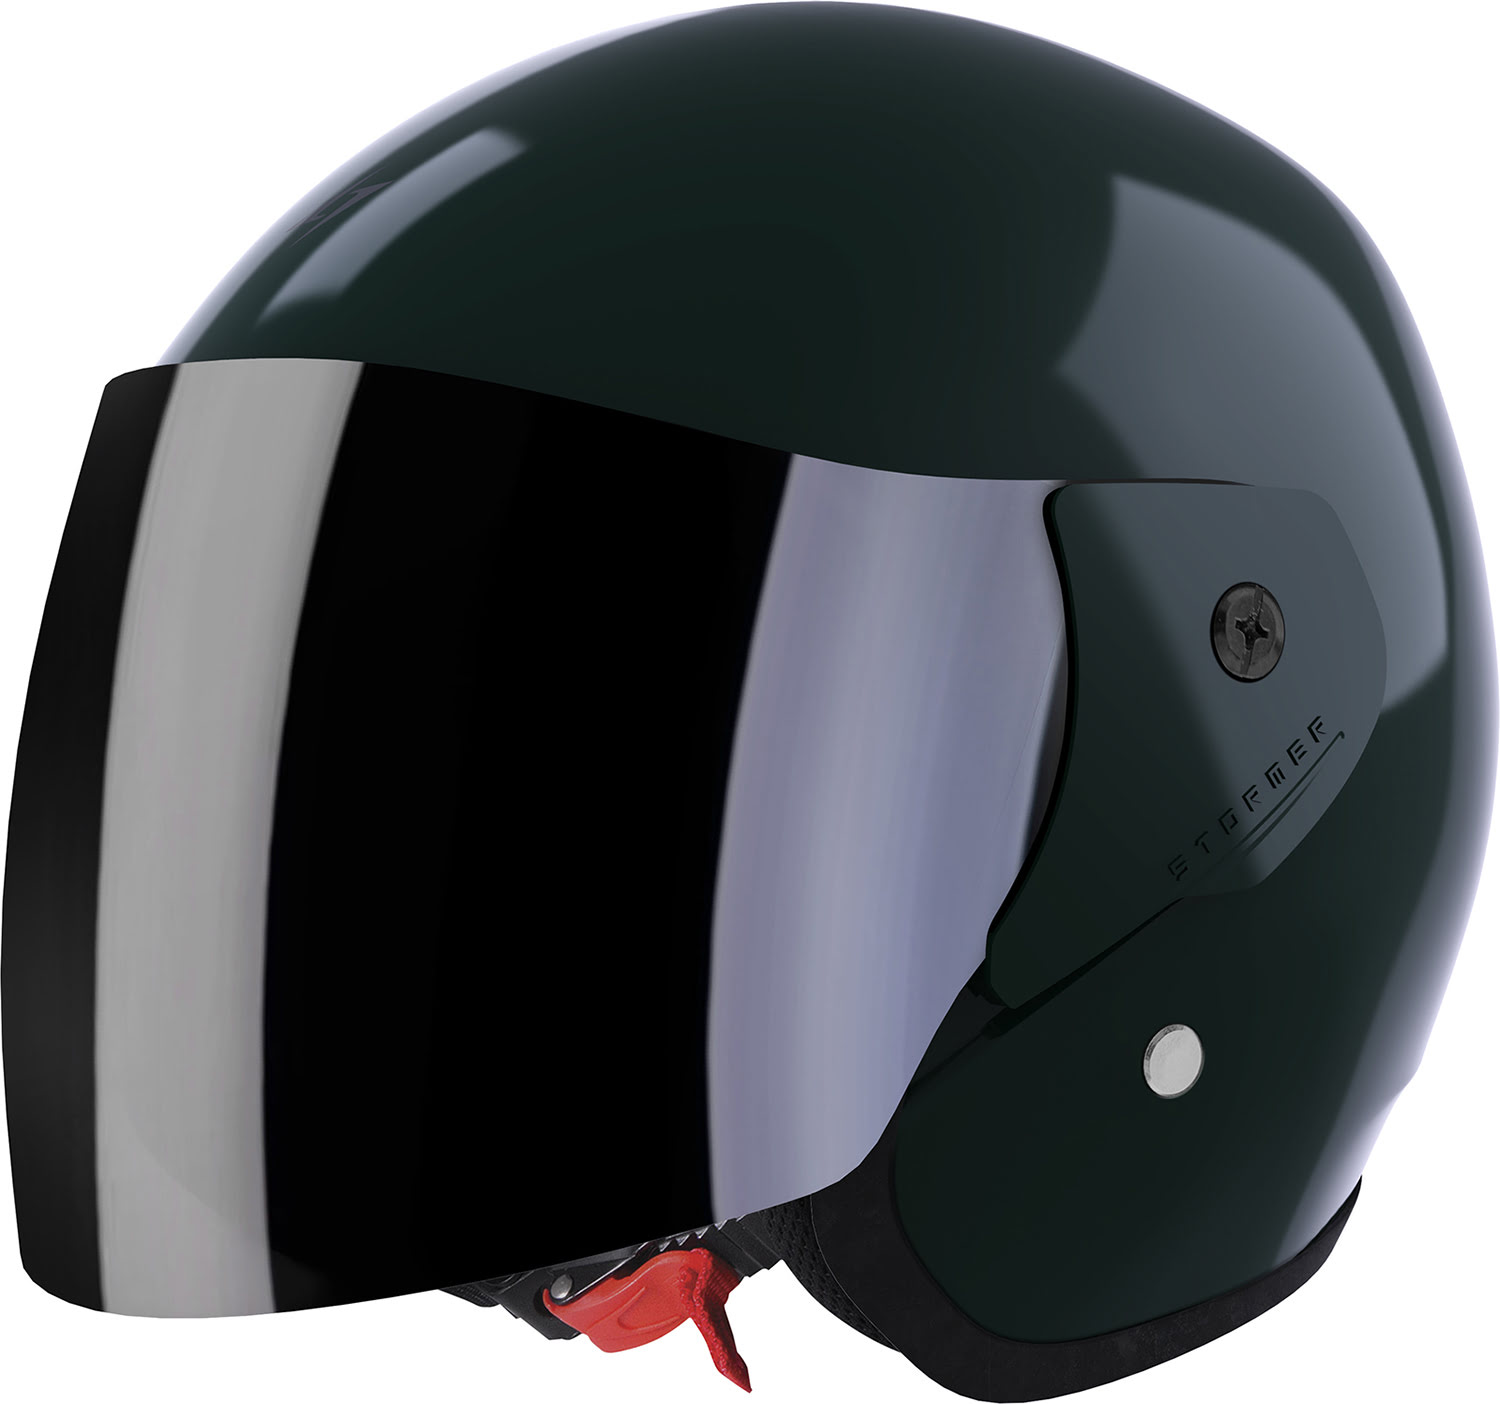 Helmet SUN 2.0 English Green Glossy STORMER 